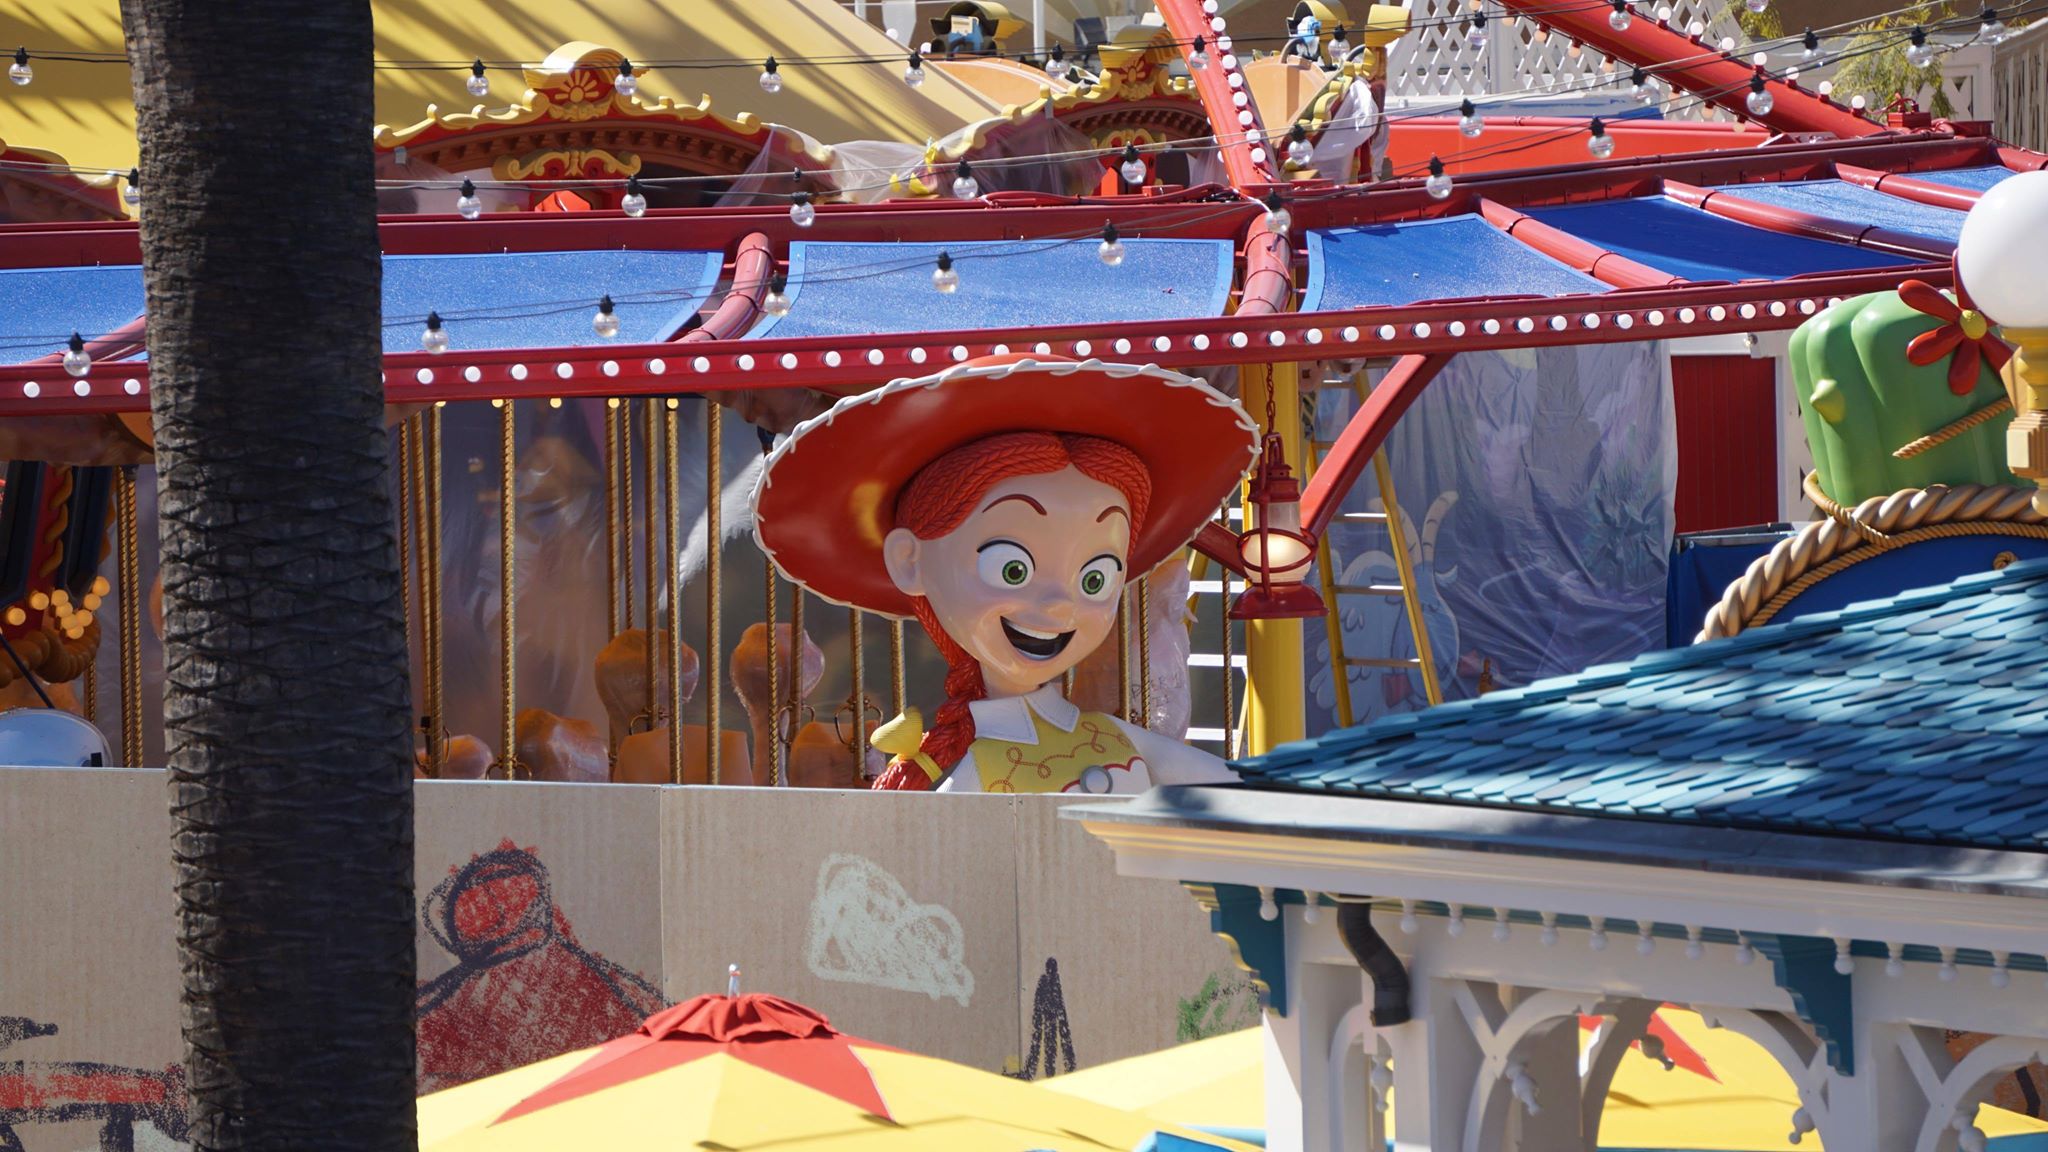 Sneak A Peek At Jessie’s Critter Carousel In Disney California Adventure Park